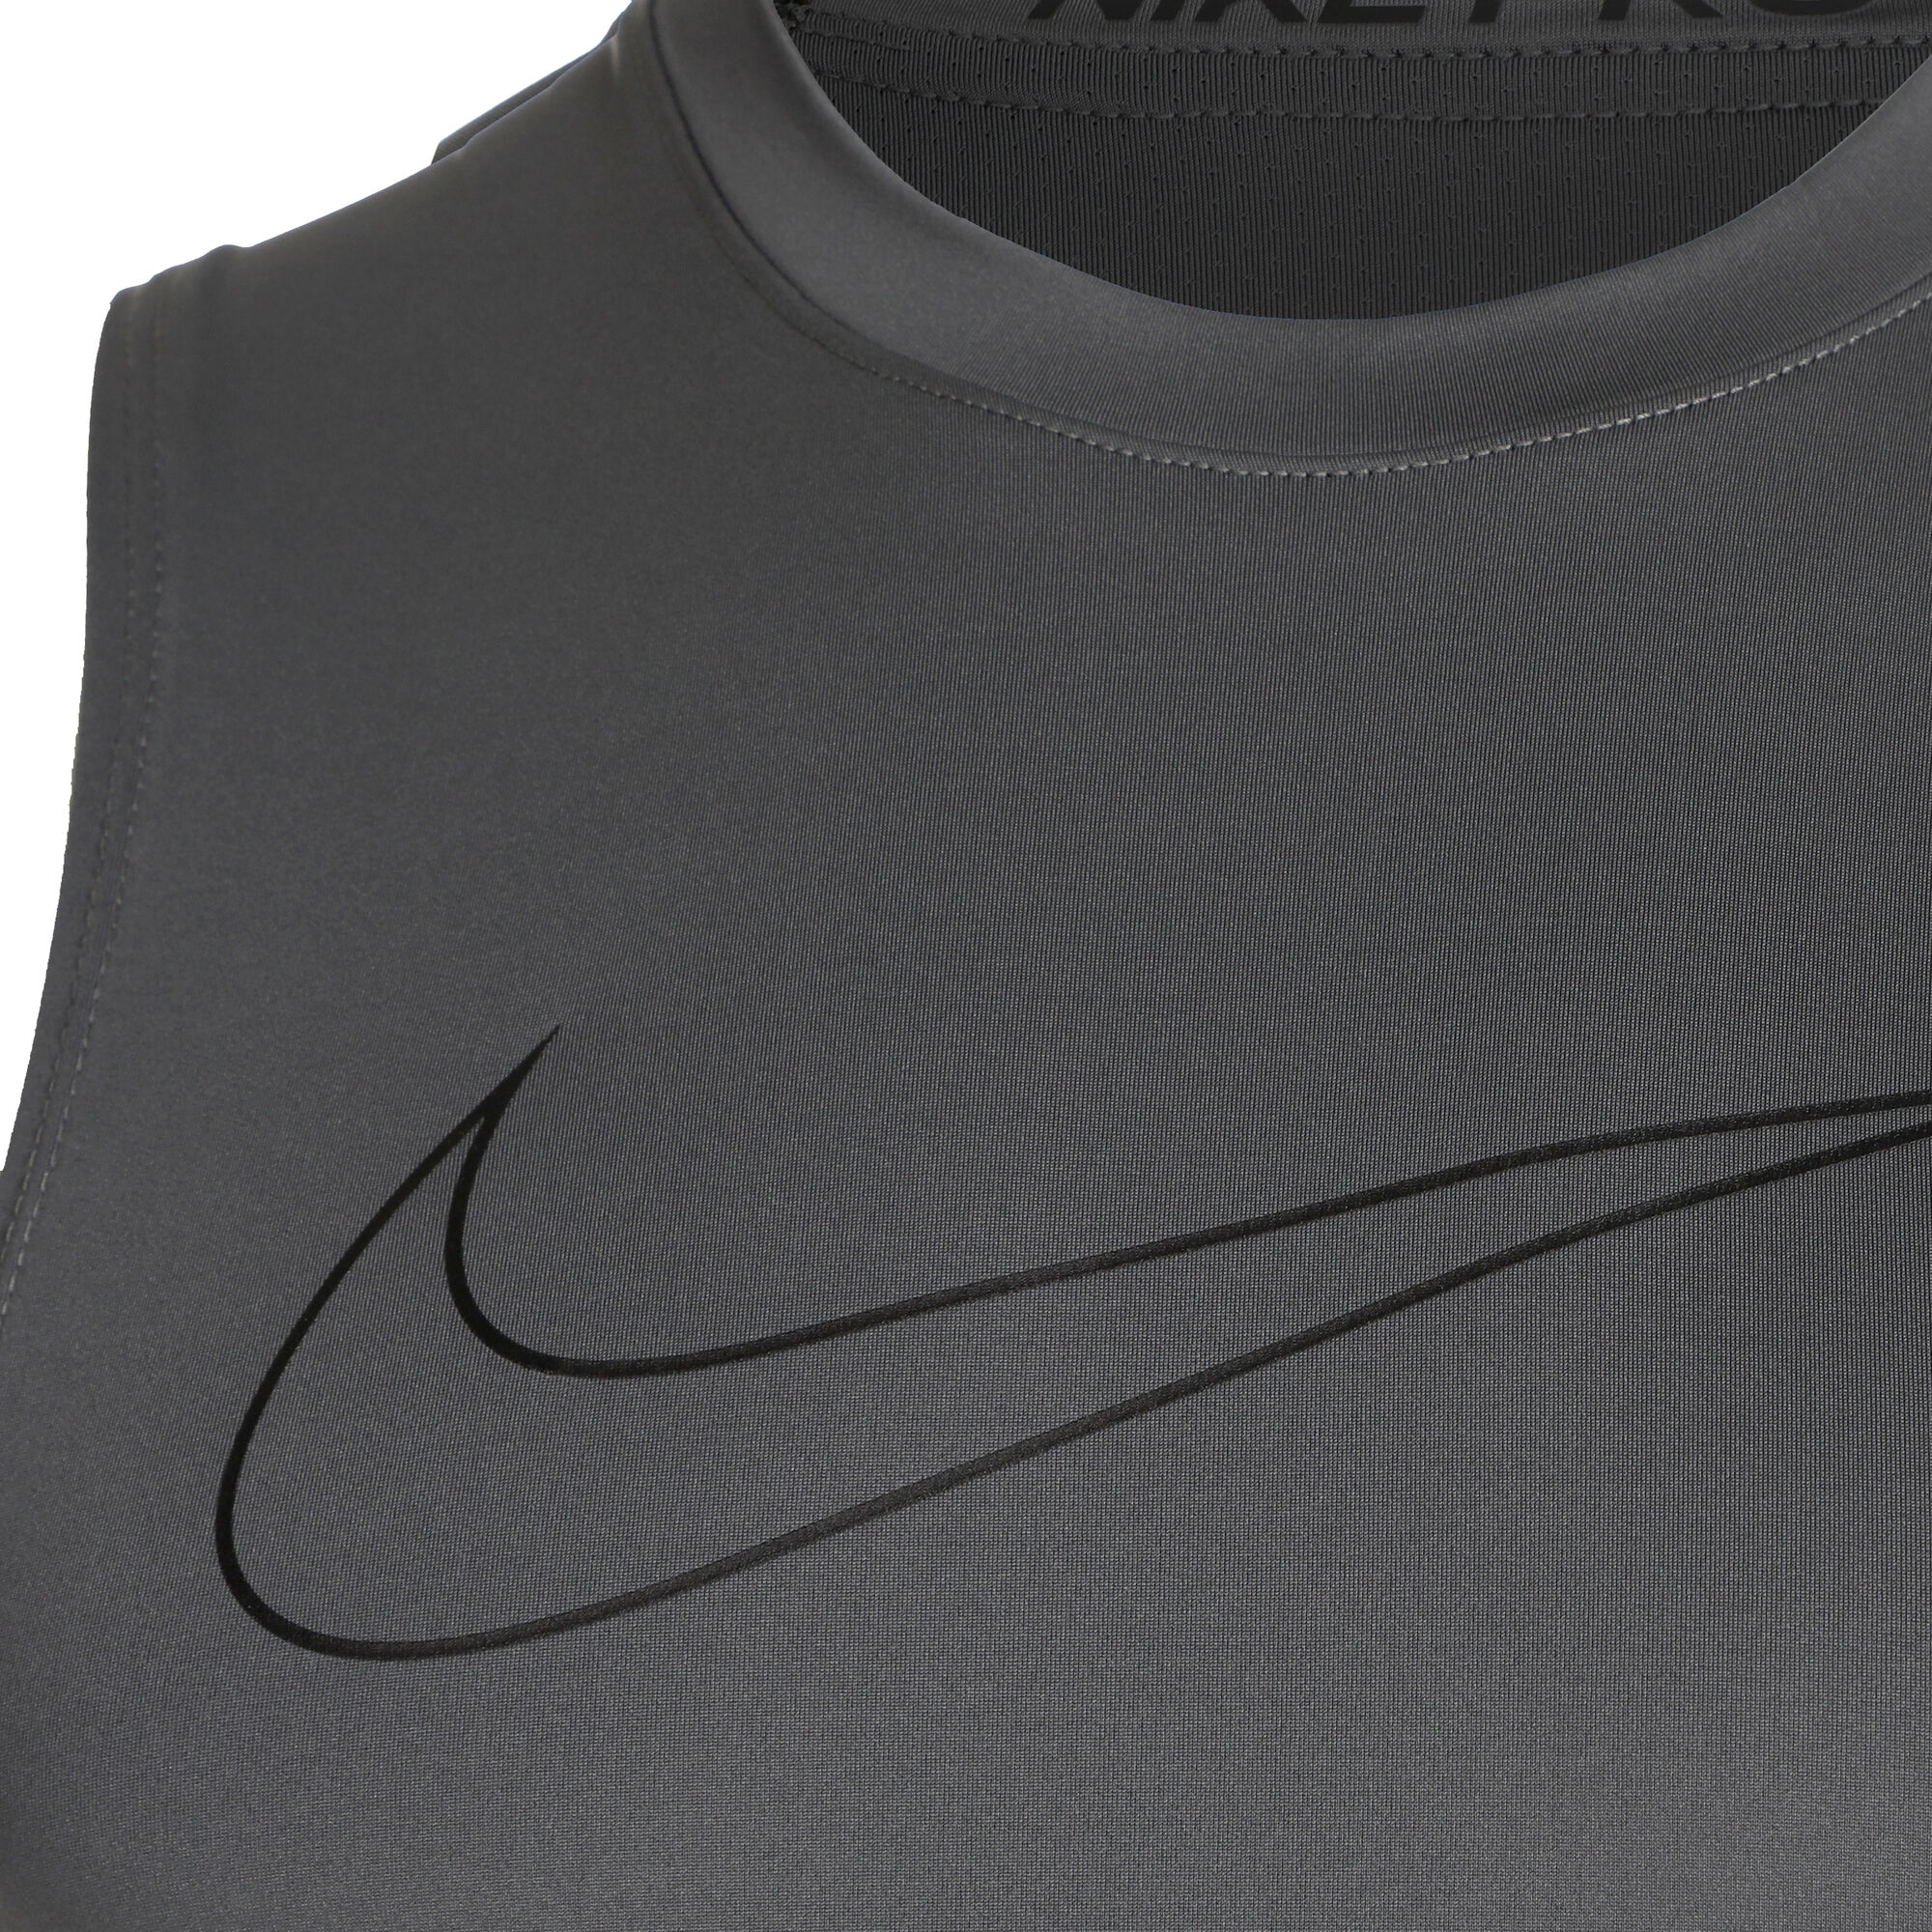 Buy Nike Dri-Fit Pro Tight Tank Top Men Grey, Black online